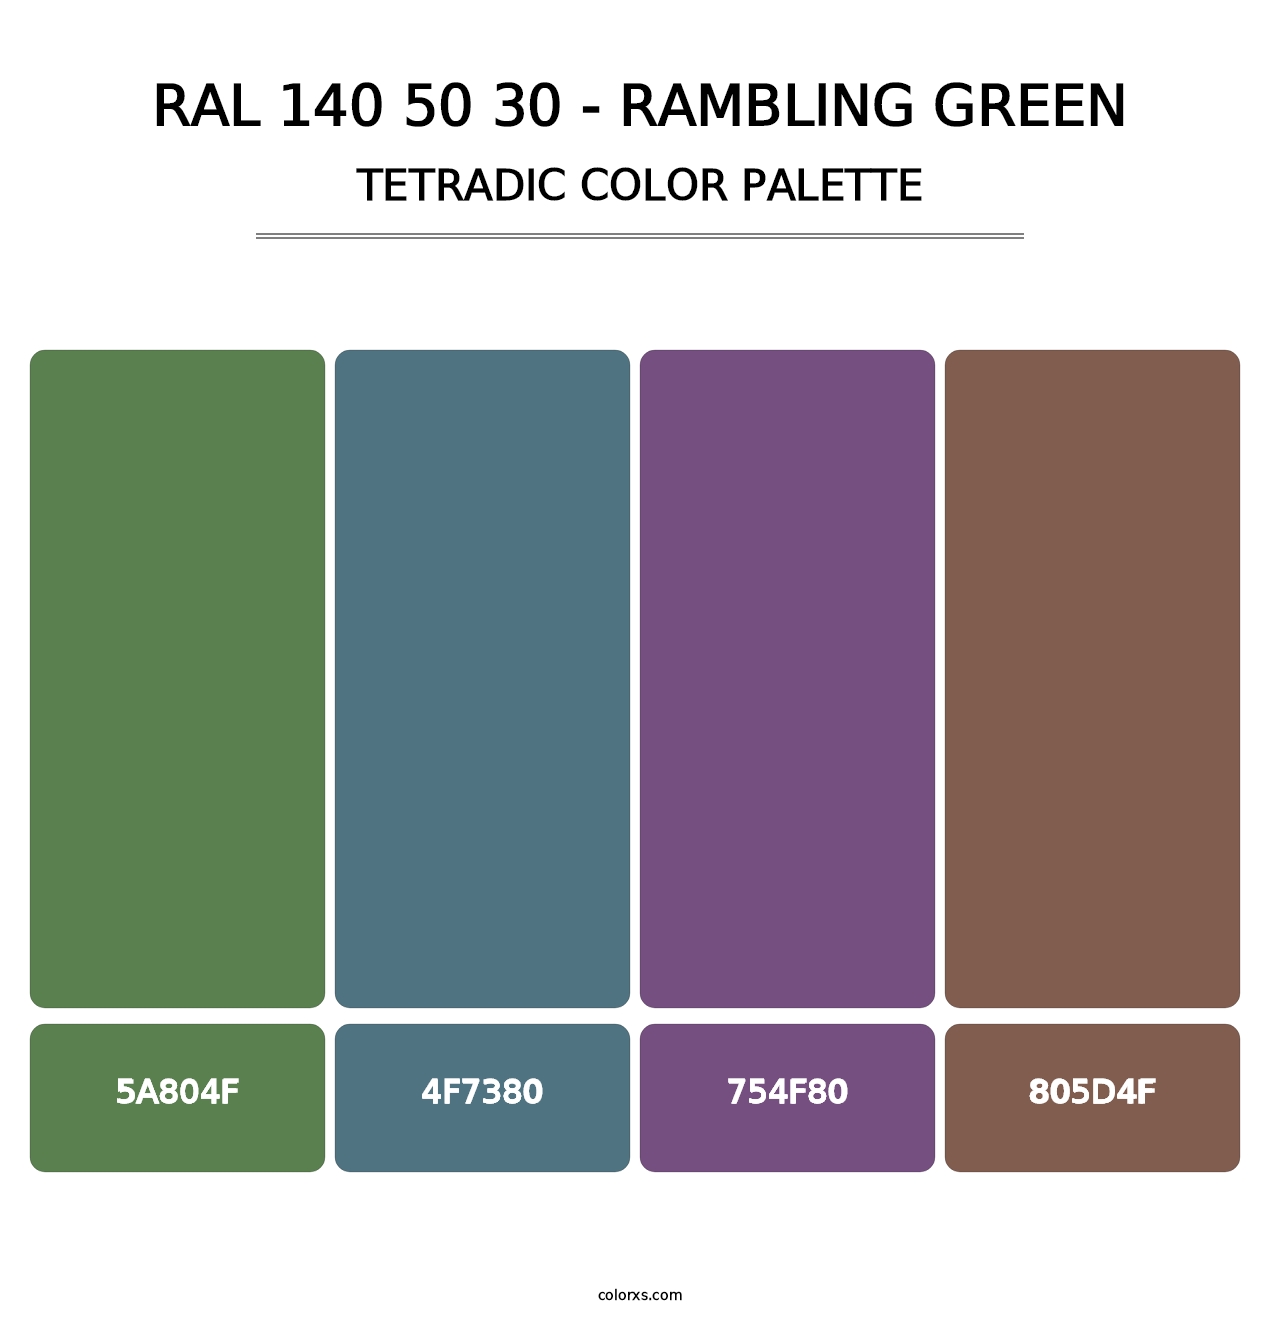 RAL 140 50 30 - Rambling Green - Tetradic Color Palette